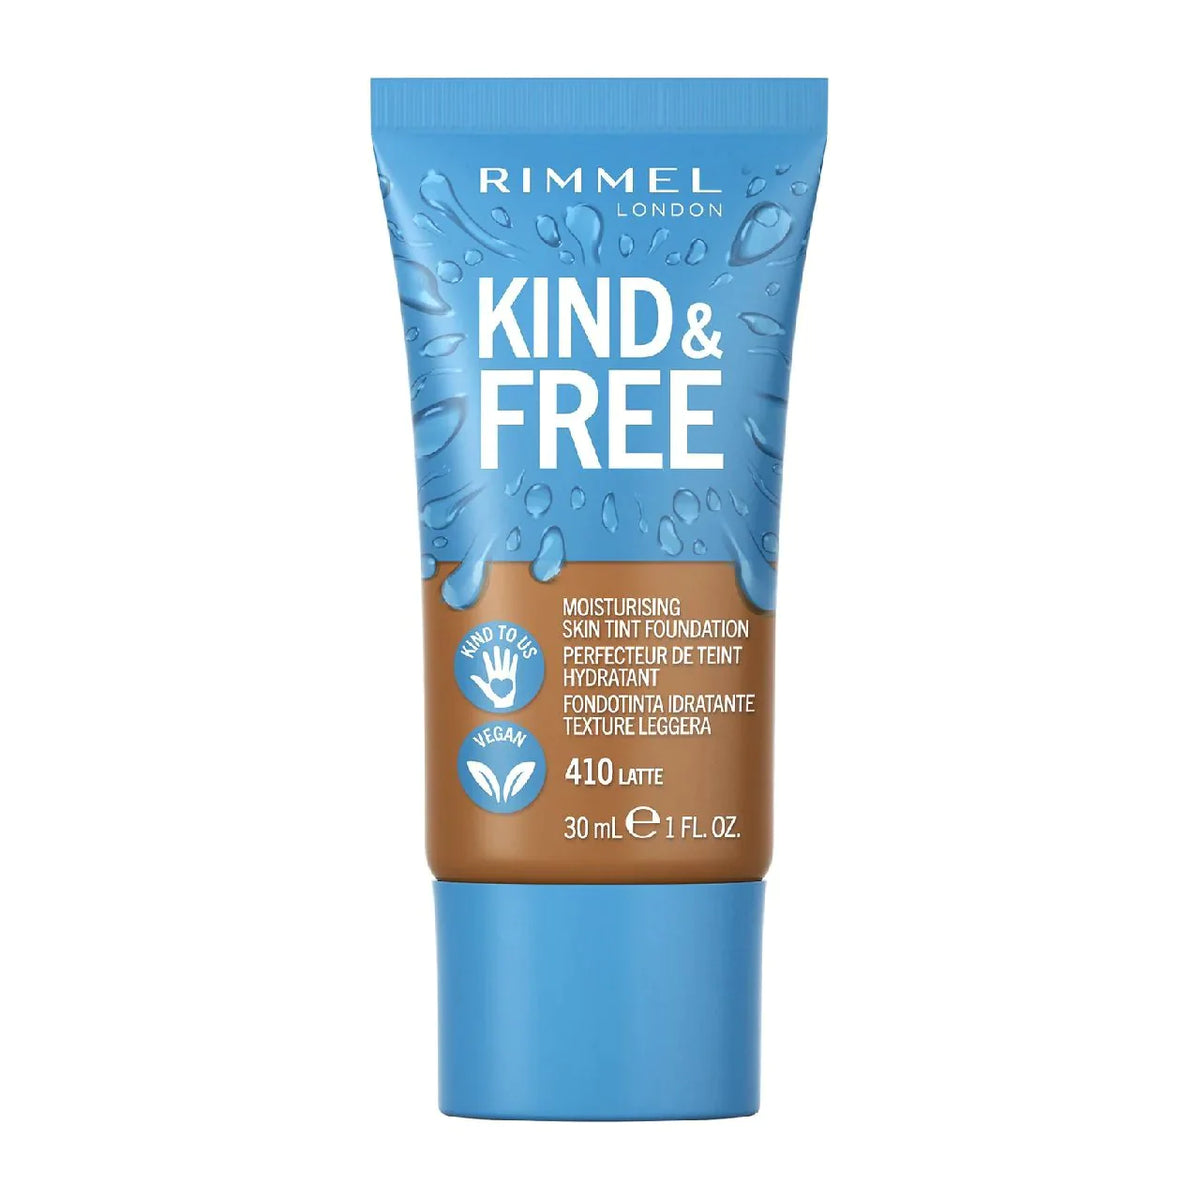 Rimmel Kind & Free Skin Tint Foundation - 410 Latte 30Ml